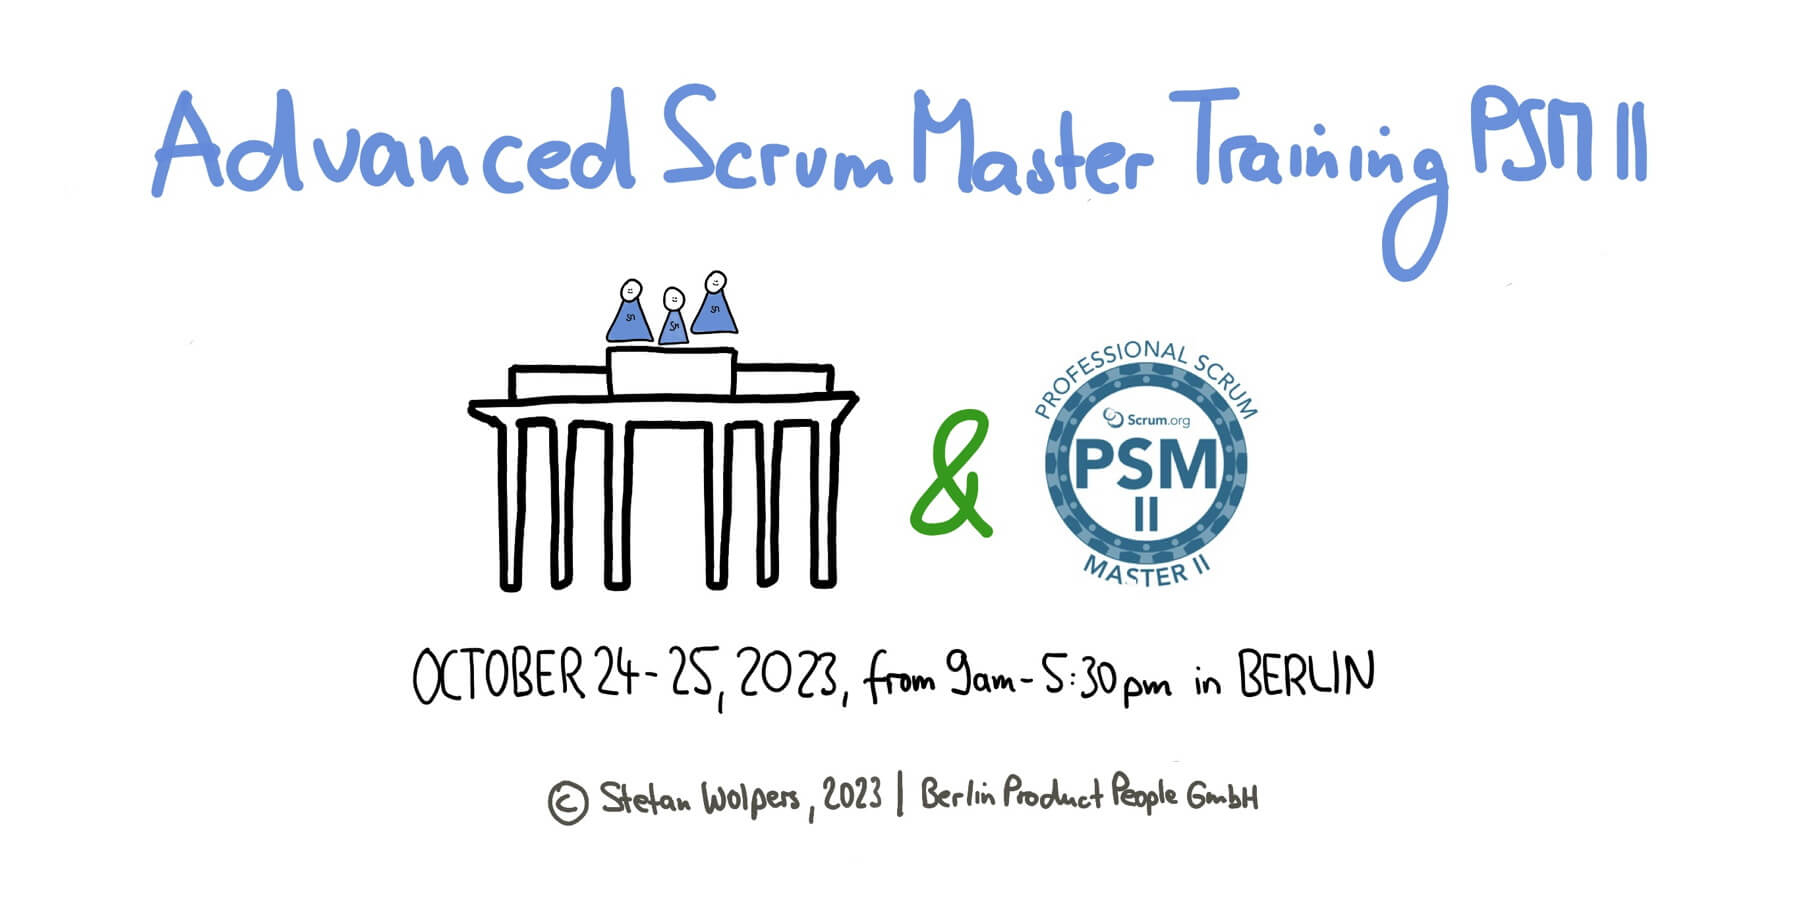 Advanced Professional Scrum Master Training in Berlin w/ PSM II Certificate — October 24-25, 2023 — Berlin-Product-People.com